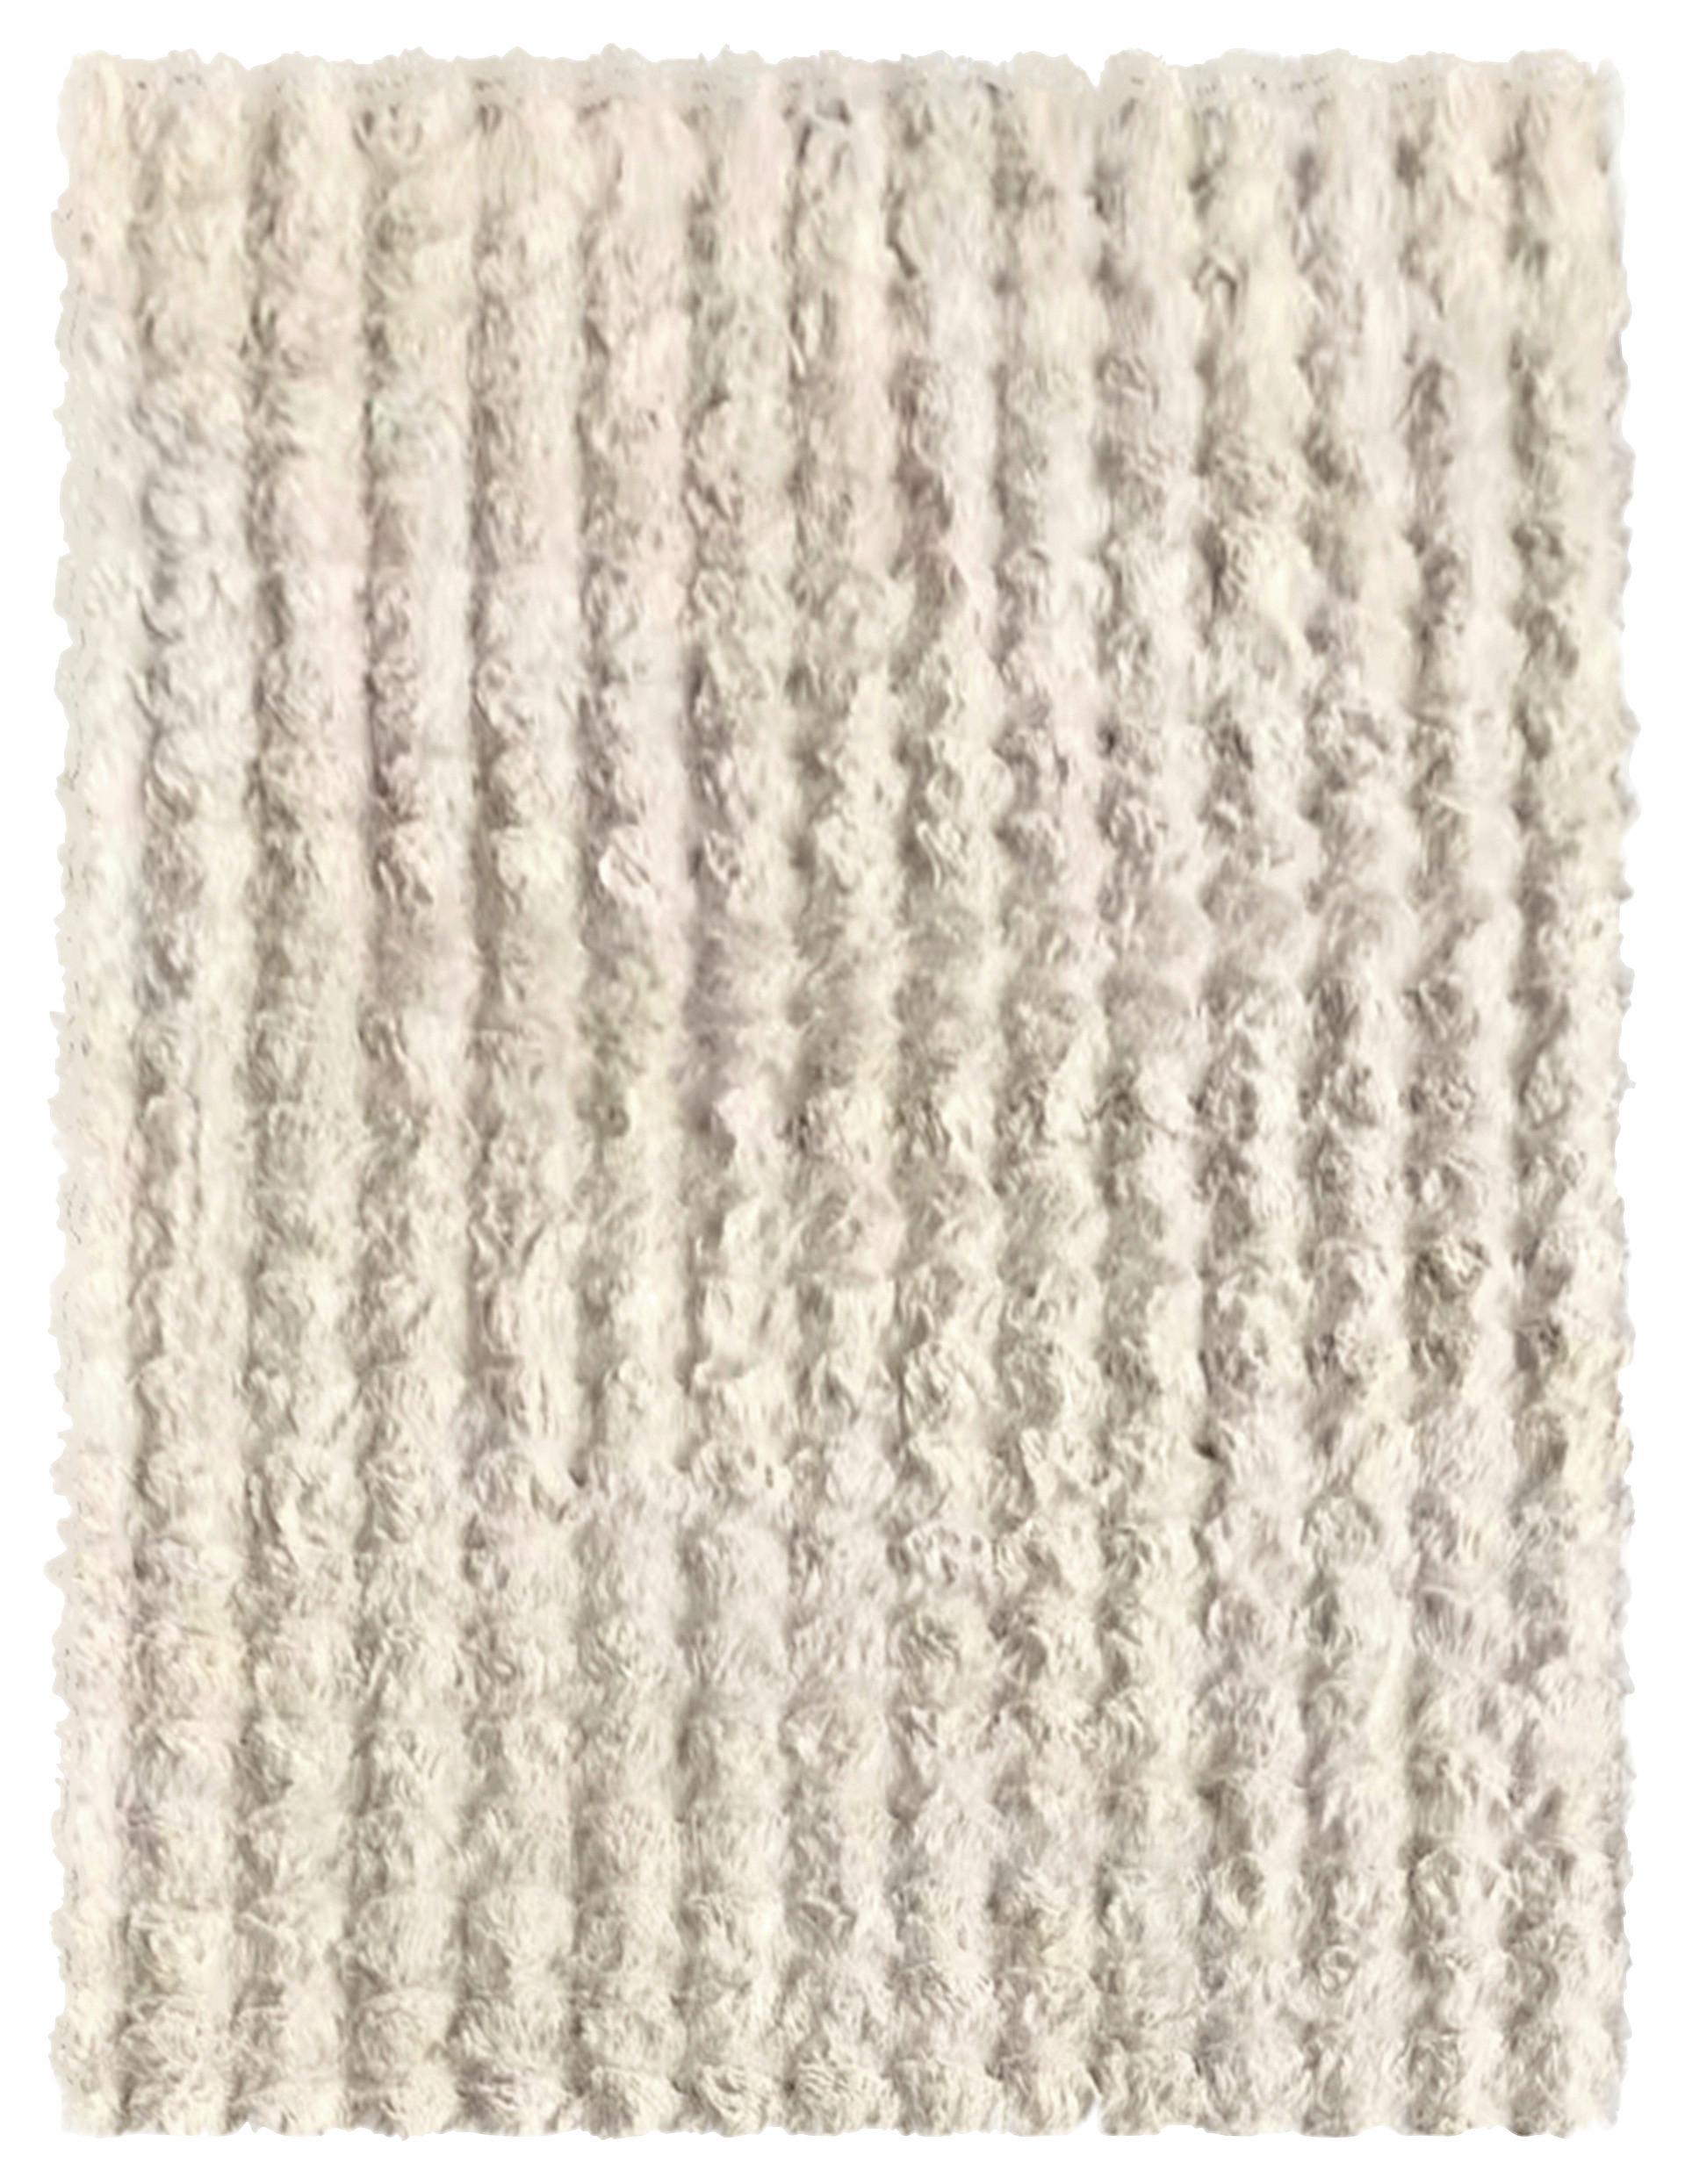 Fellteppich 120x160 cm - Beige, ROMANTIK / LANDHAUS, Textil (120/160cm) - James Wood